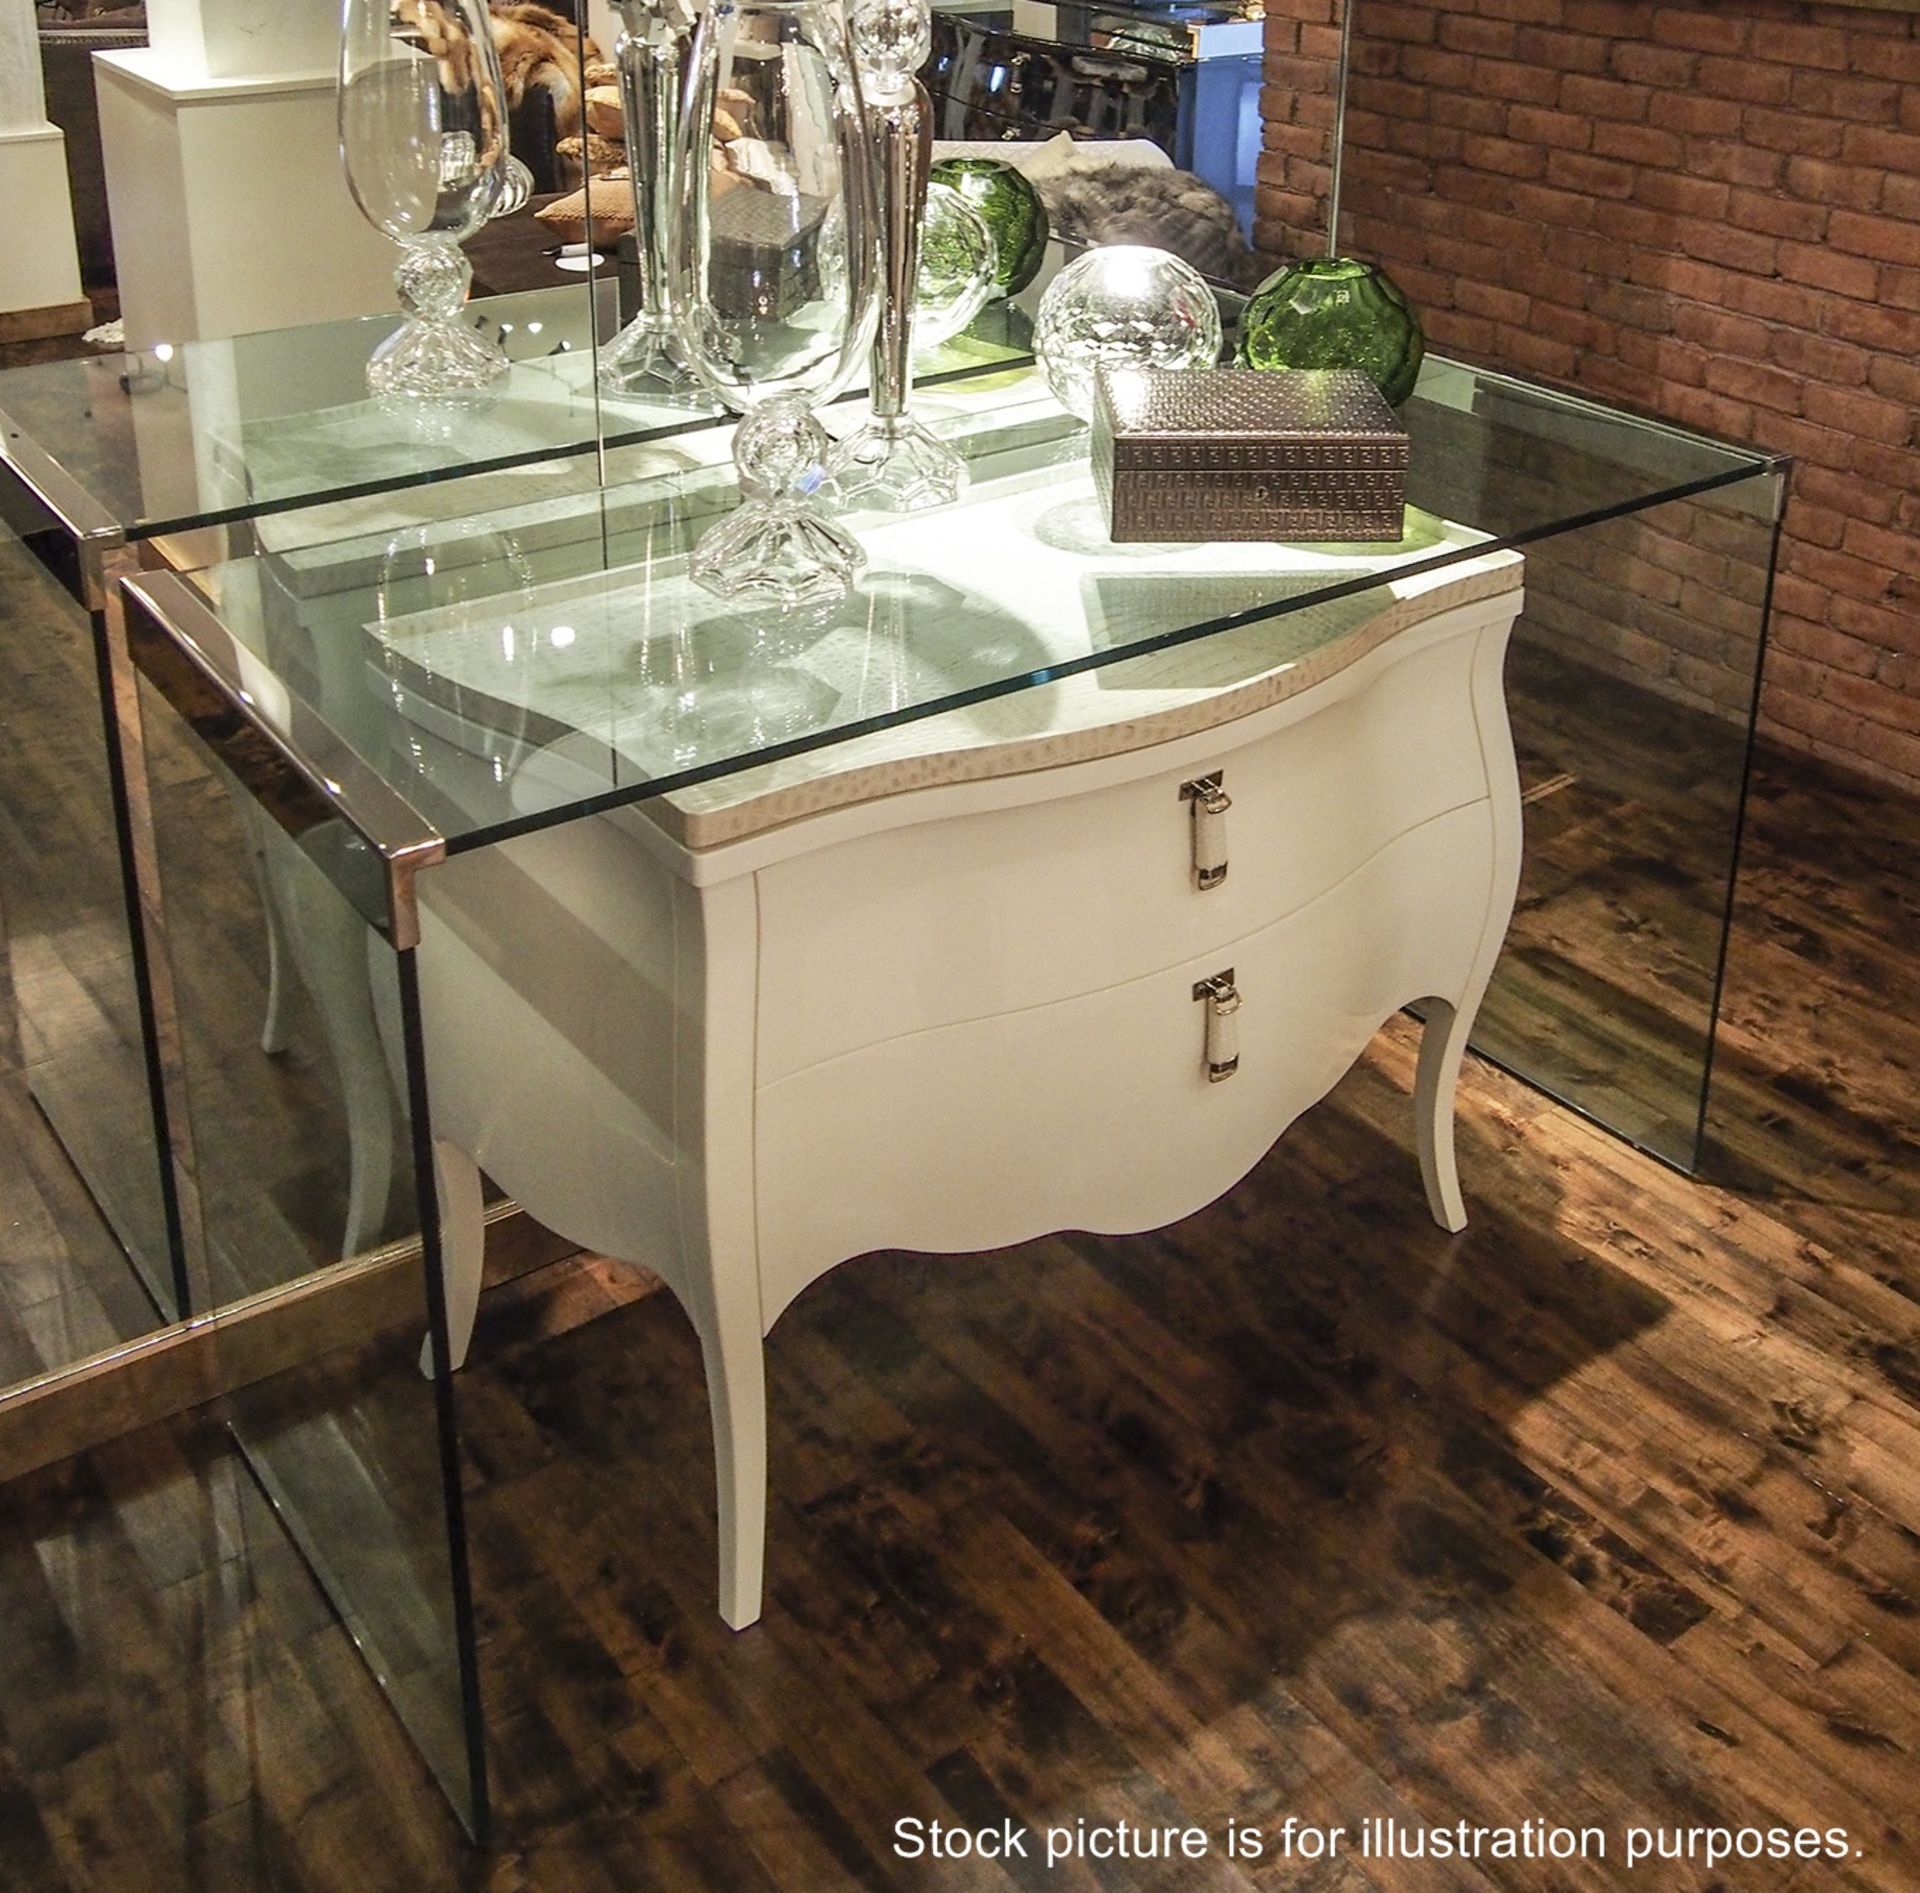 1 x FENDI Canova Glass Console Table With Chromed Corners - Dimensions: W170 x D65 x H99cm, Glass